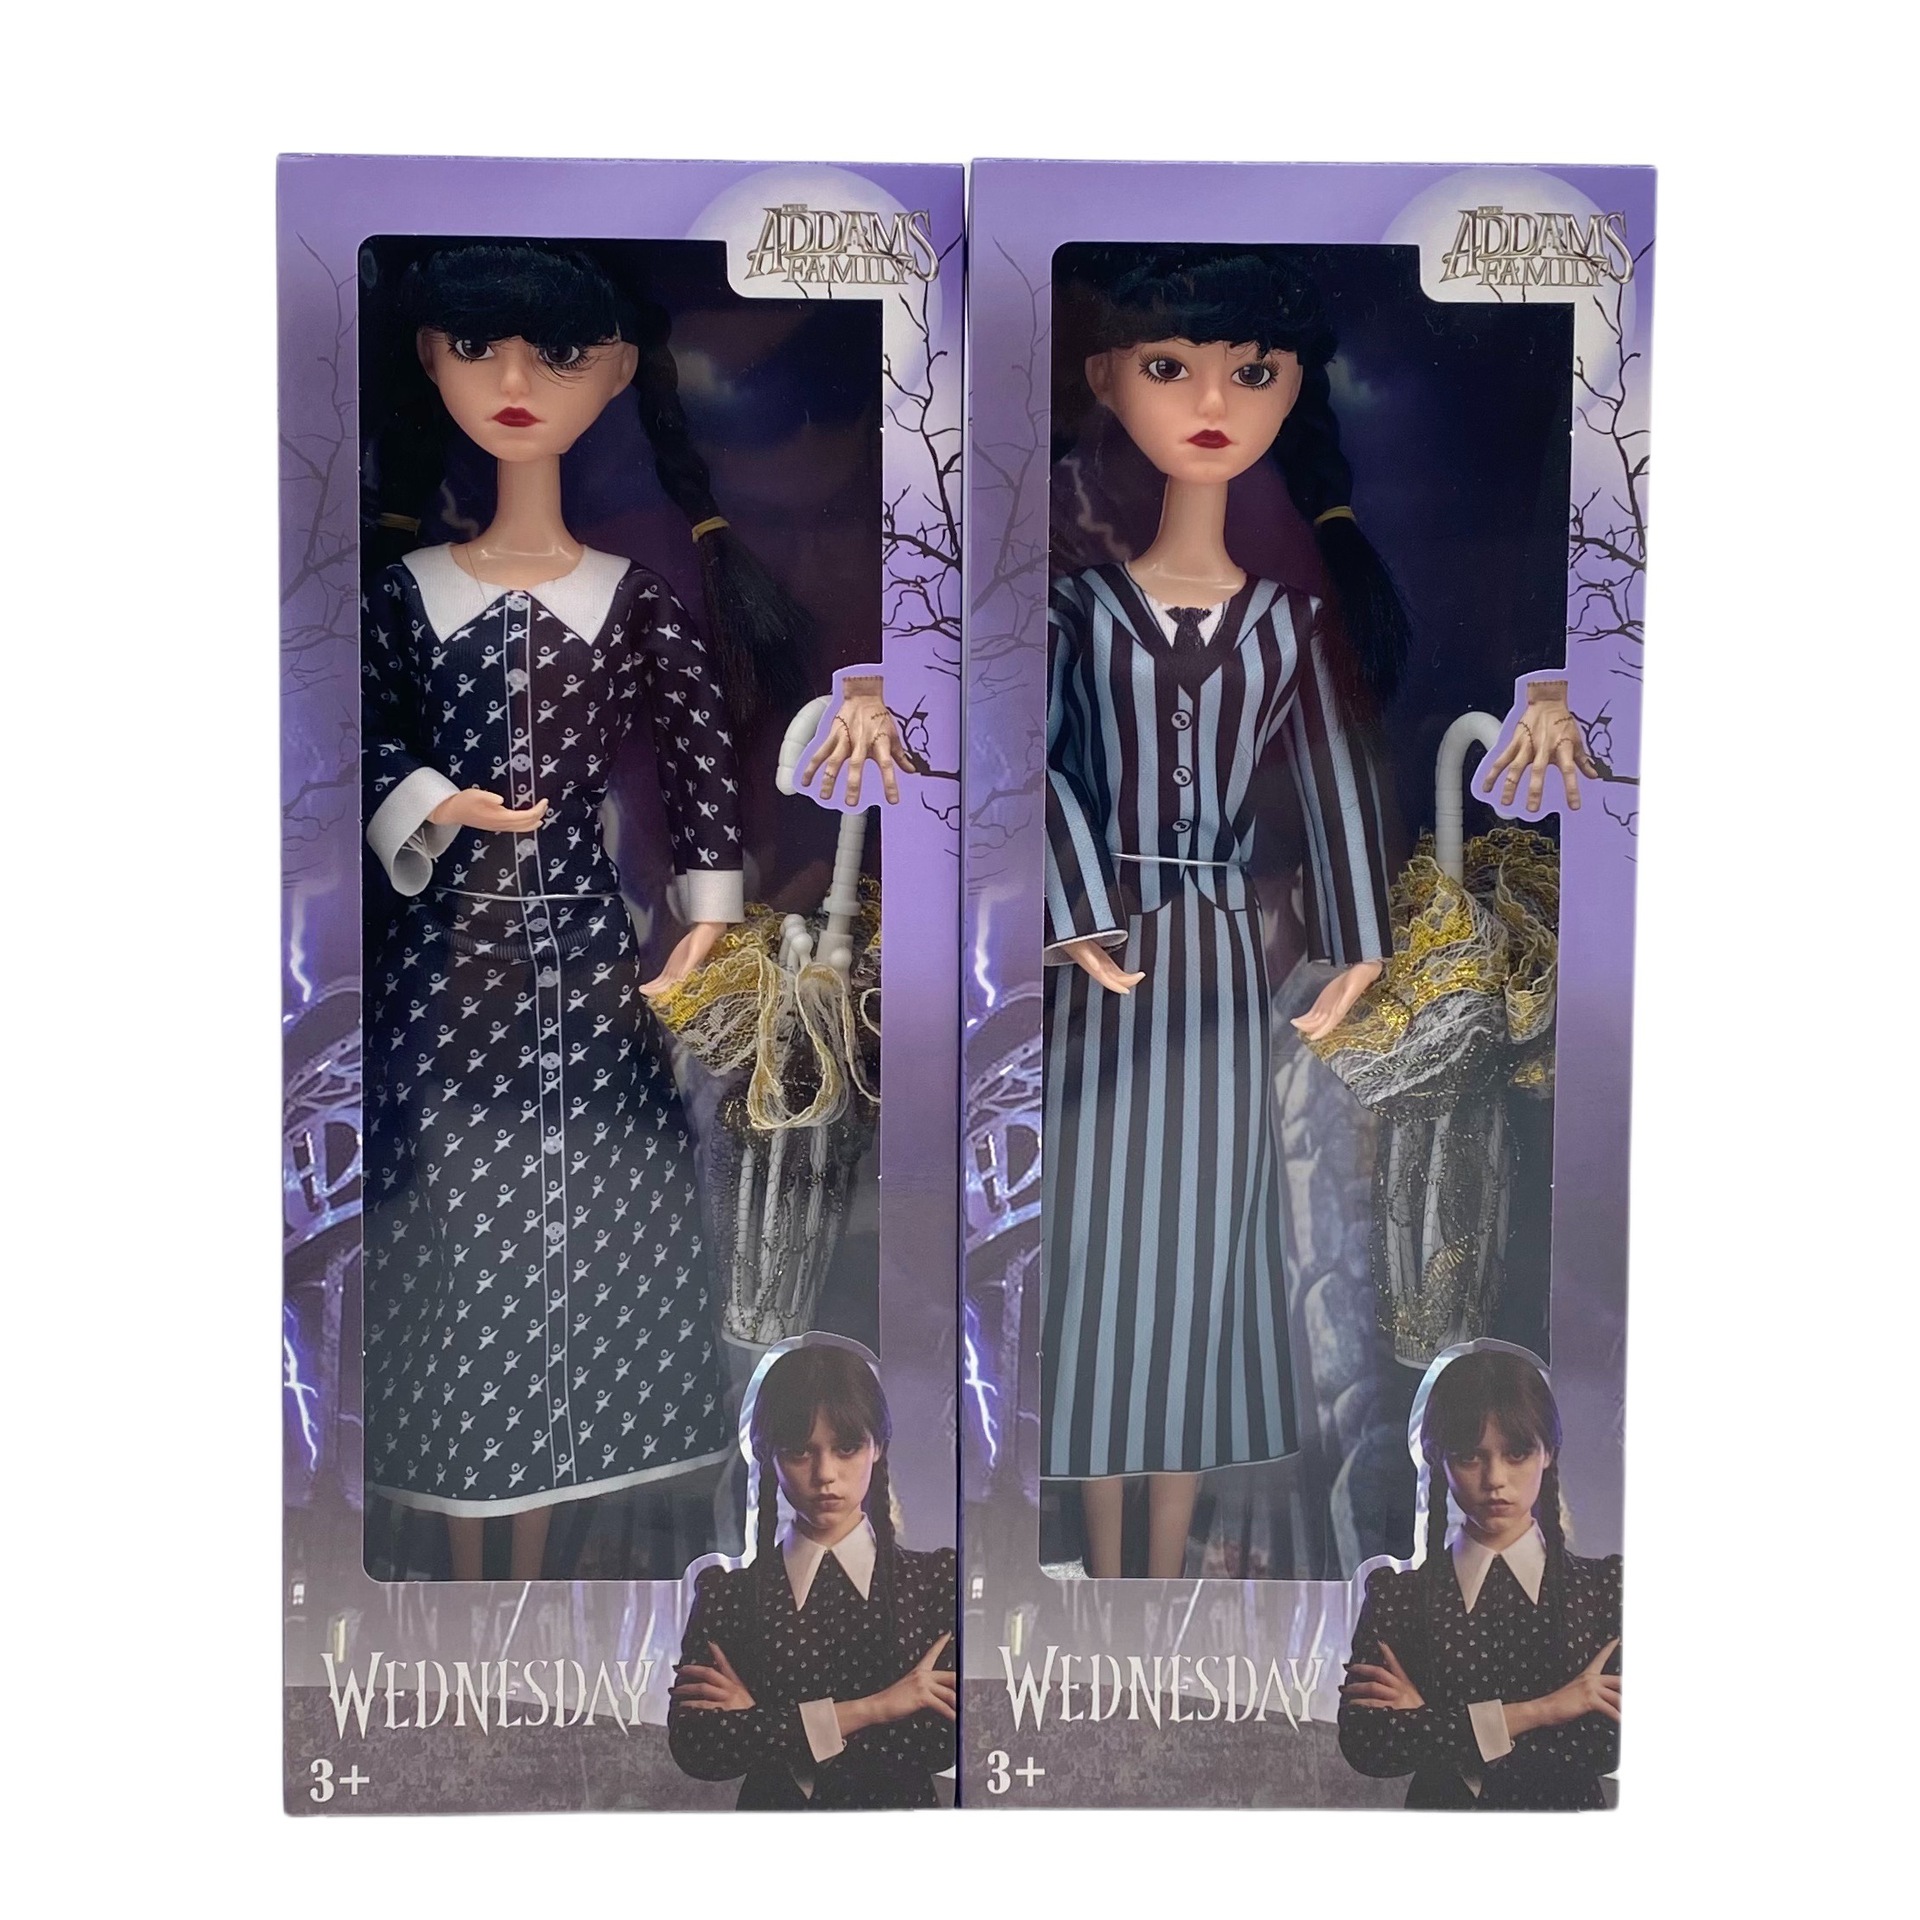 Boneca Loofamy Addams Family: Figura de plástico 11,5 com vestido listrado curto, presente ideal para meninas e fãs